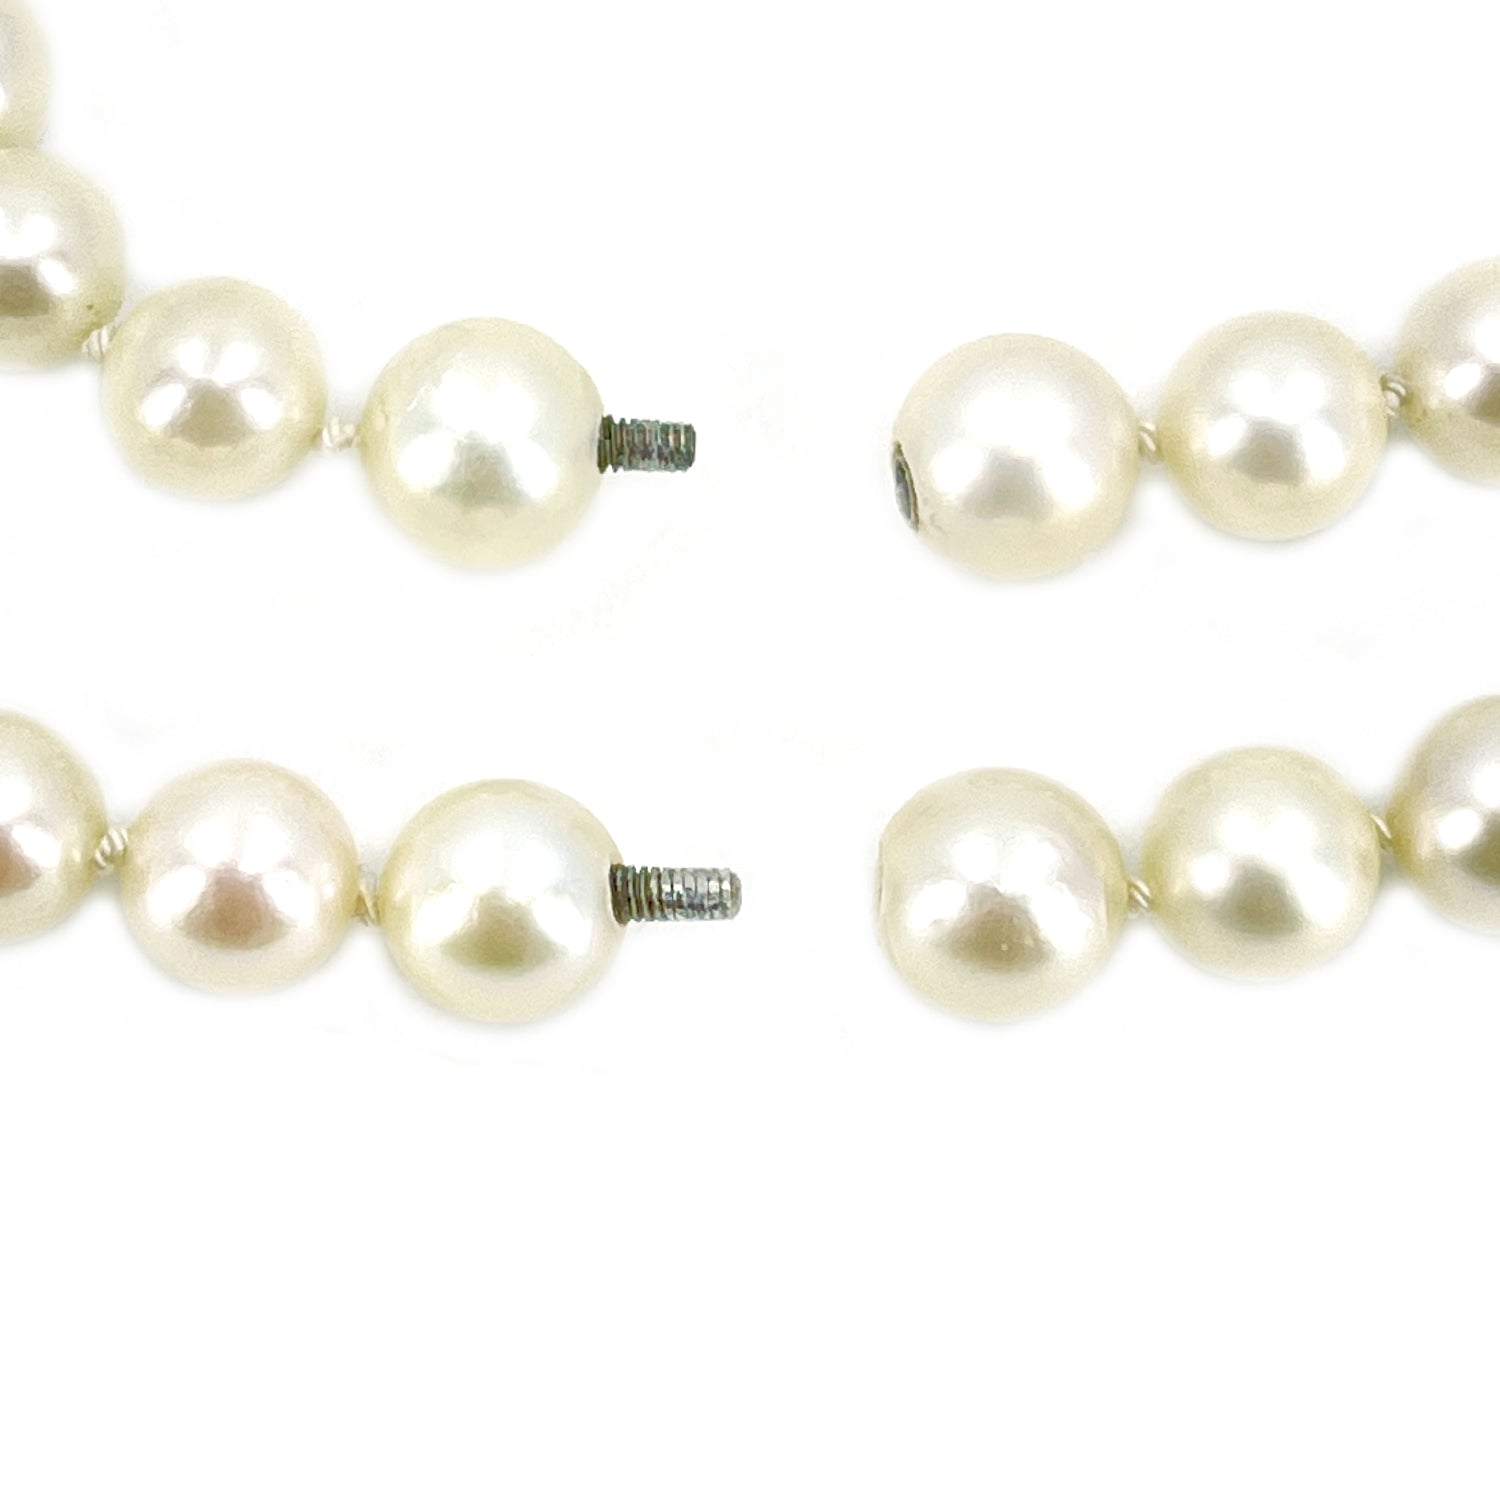 Vintage Hidden Clasp Japanese Saltwater Cultured Akoya Pearl Necklace Strand Bracelet Set - 23.50 & 7.75 Inch